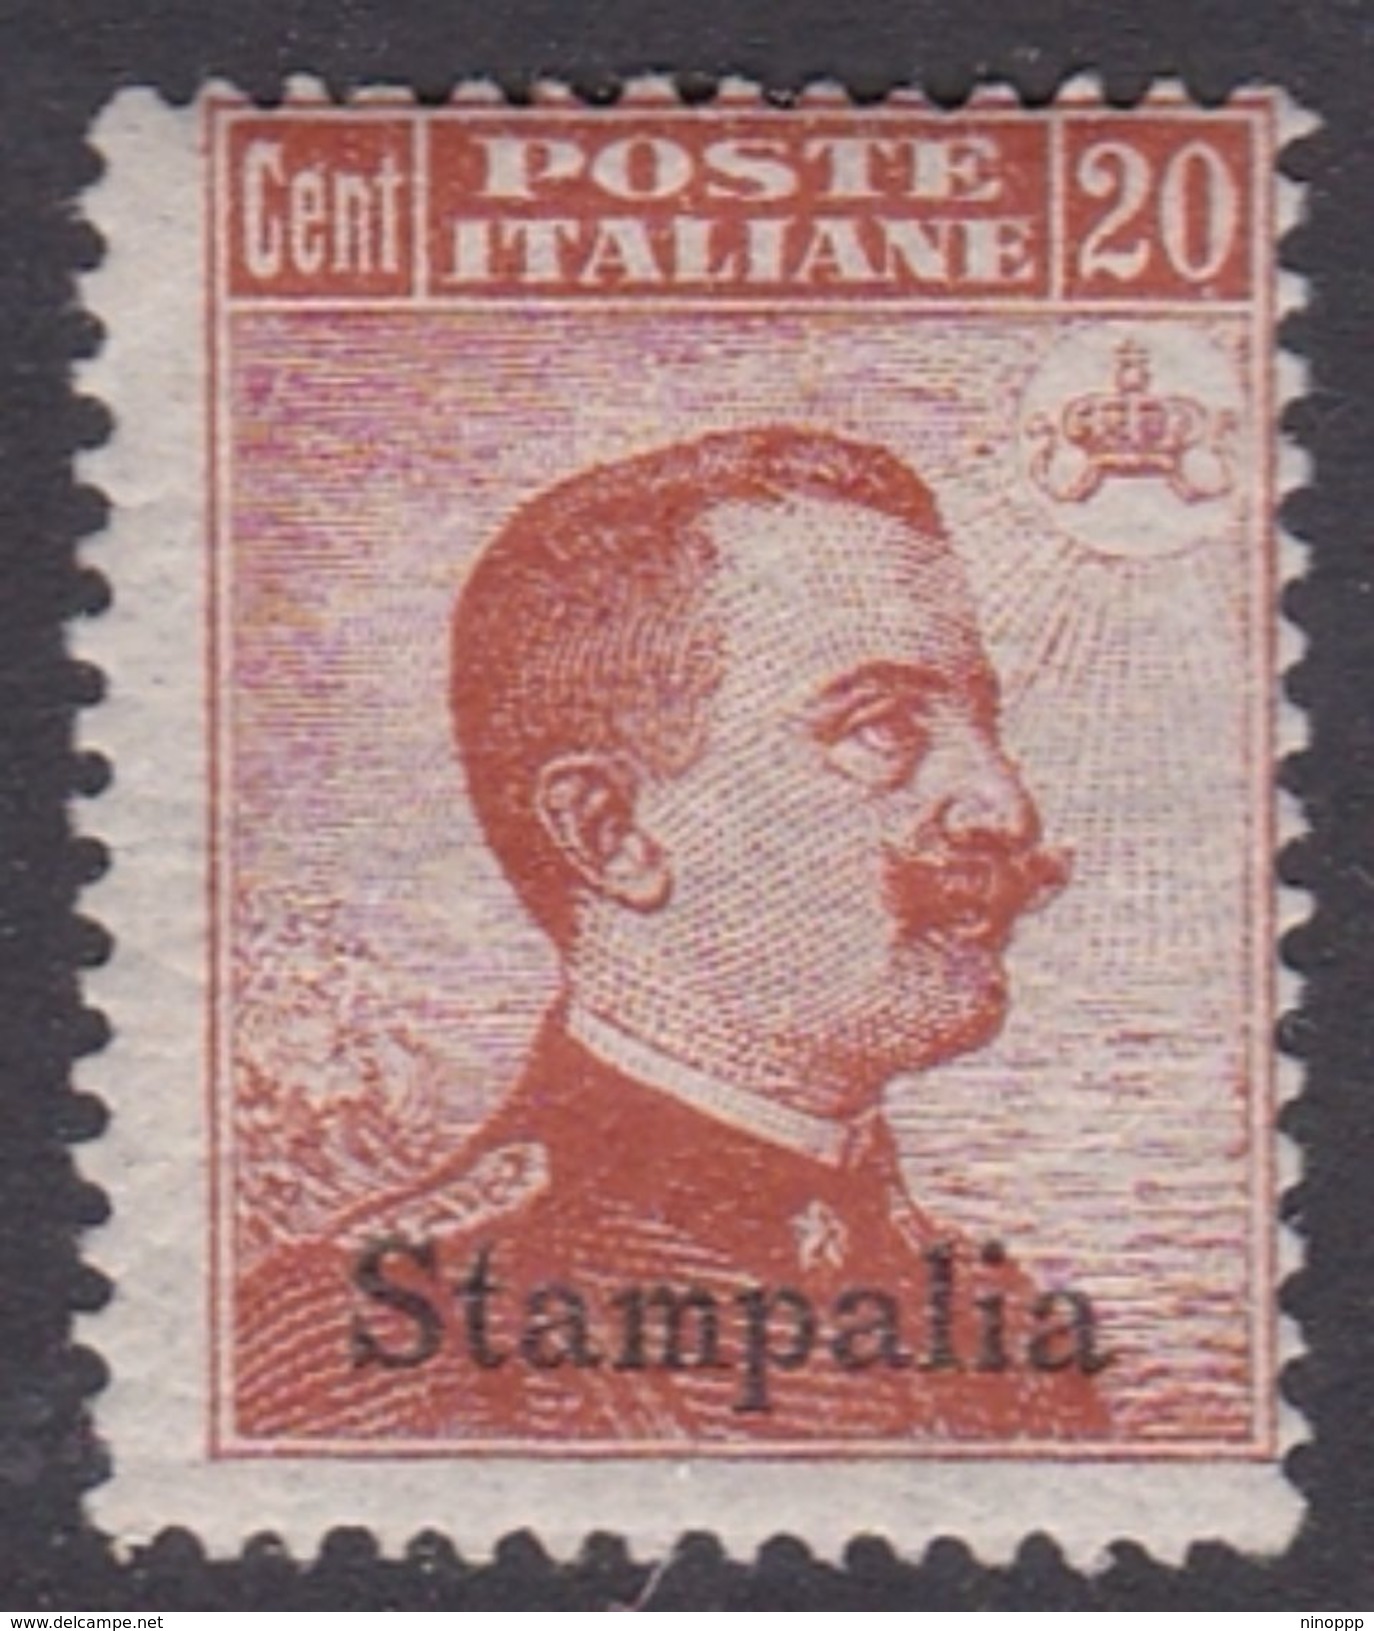 Italy-Colonies And Territories-Aegean-Stampalia S9 1917 20c Brown Orange No Watermark MH - Egée (Stampalia)